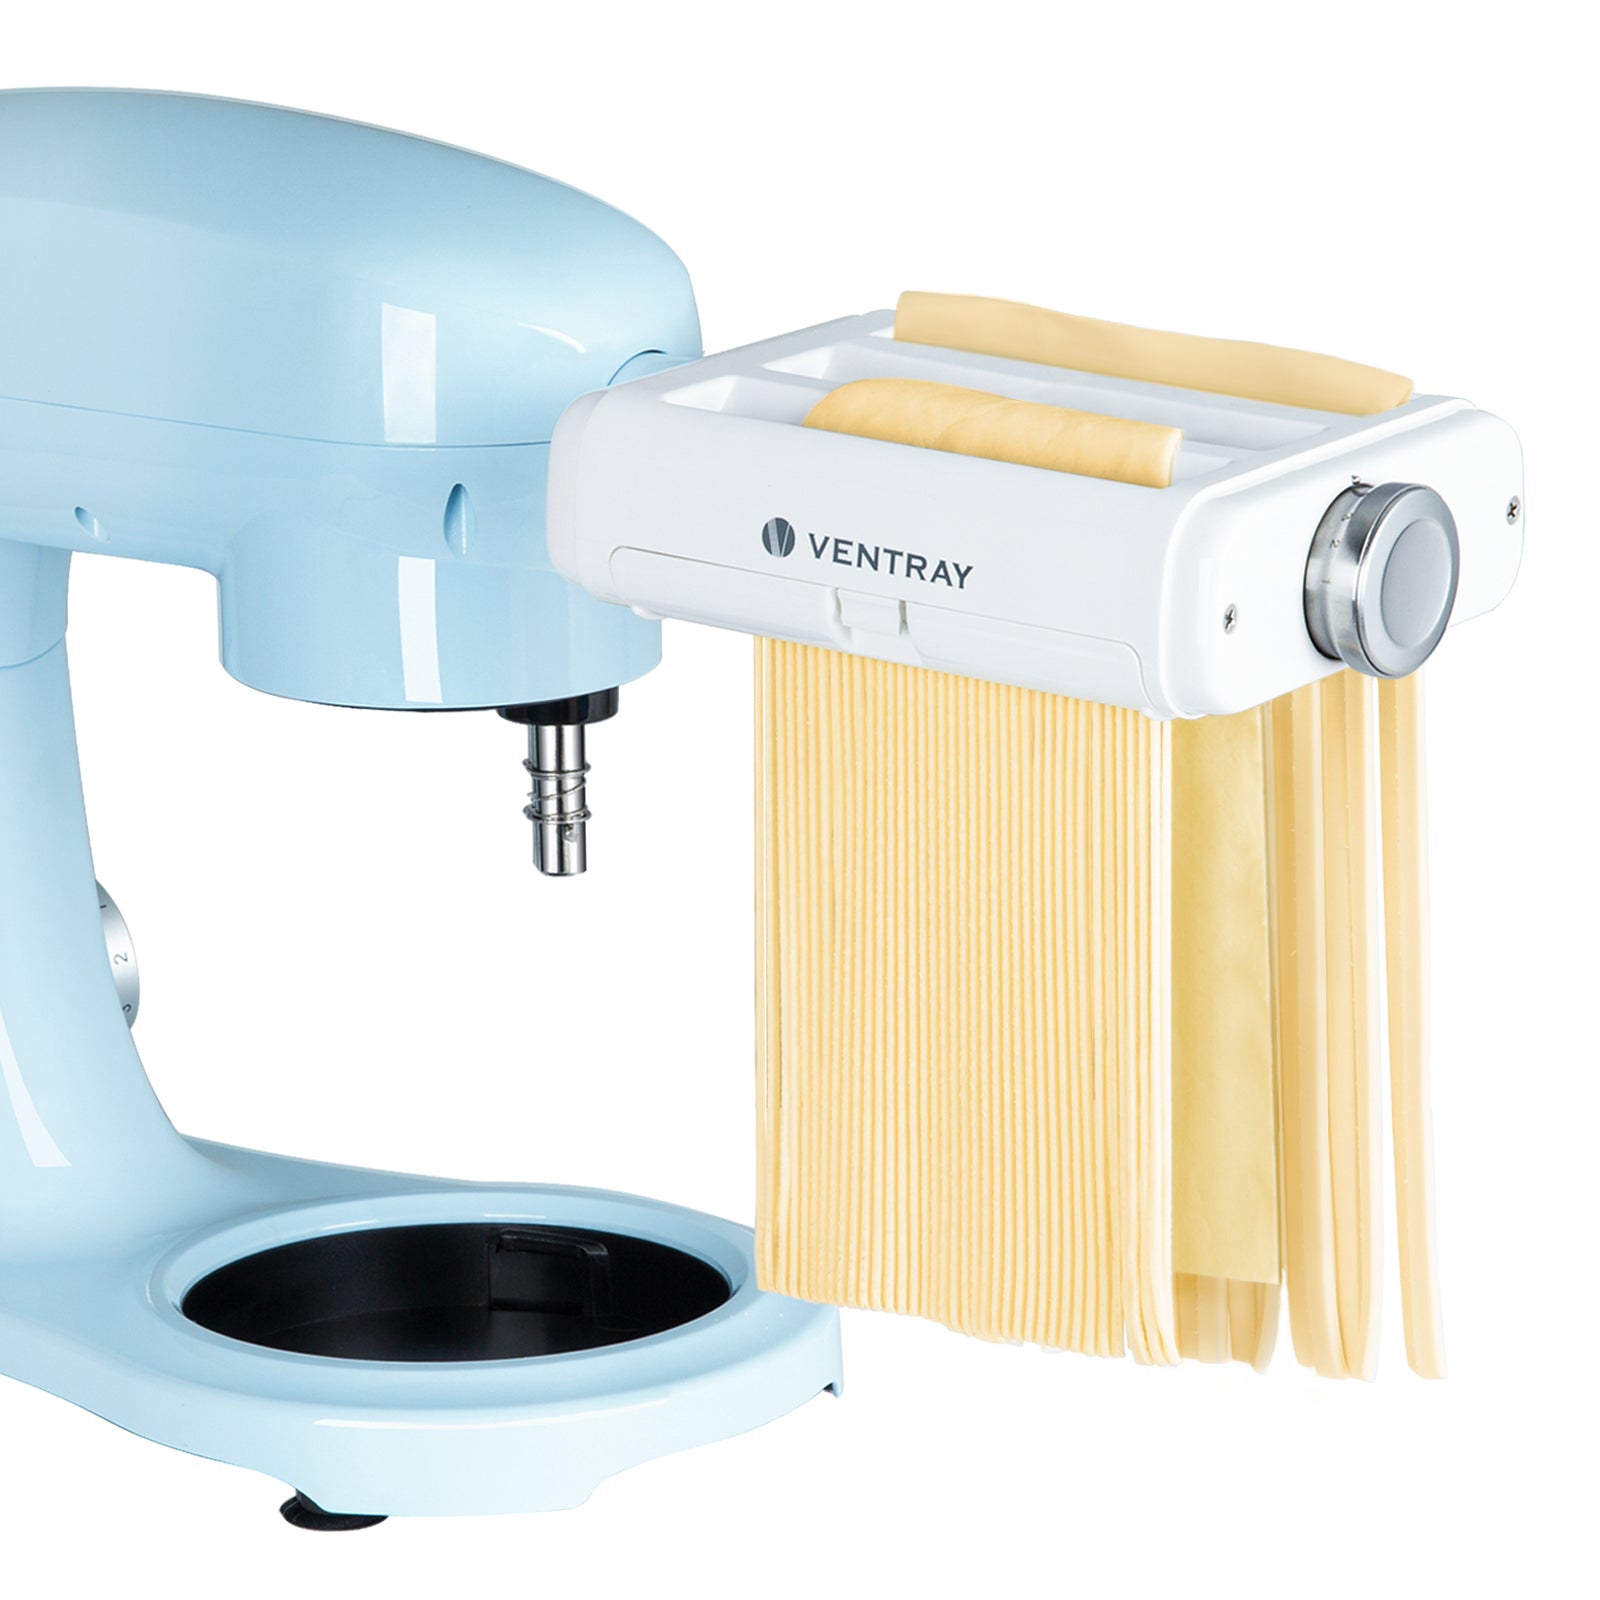 Pasta Maker Attachment for All KitchenAid Mixers, Noodle Ravioli Kitchen Aid Mixer Accessories 3 in 1 Including Dough Roller Spaghetti Cutter